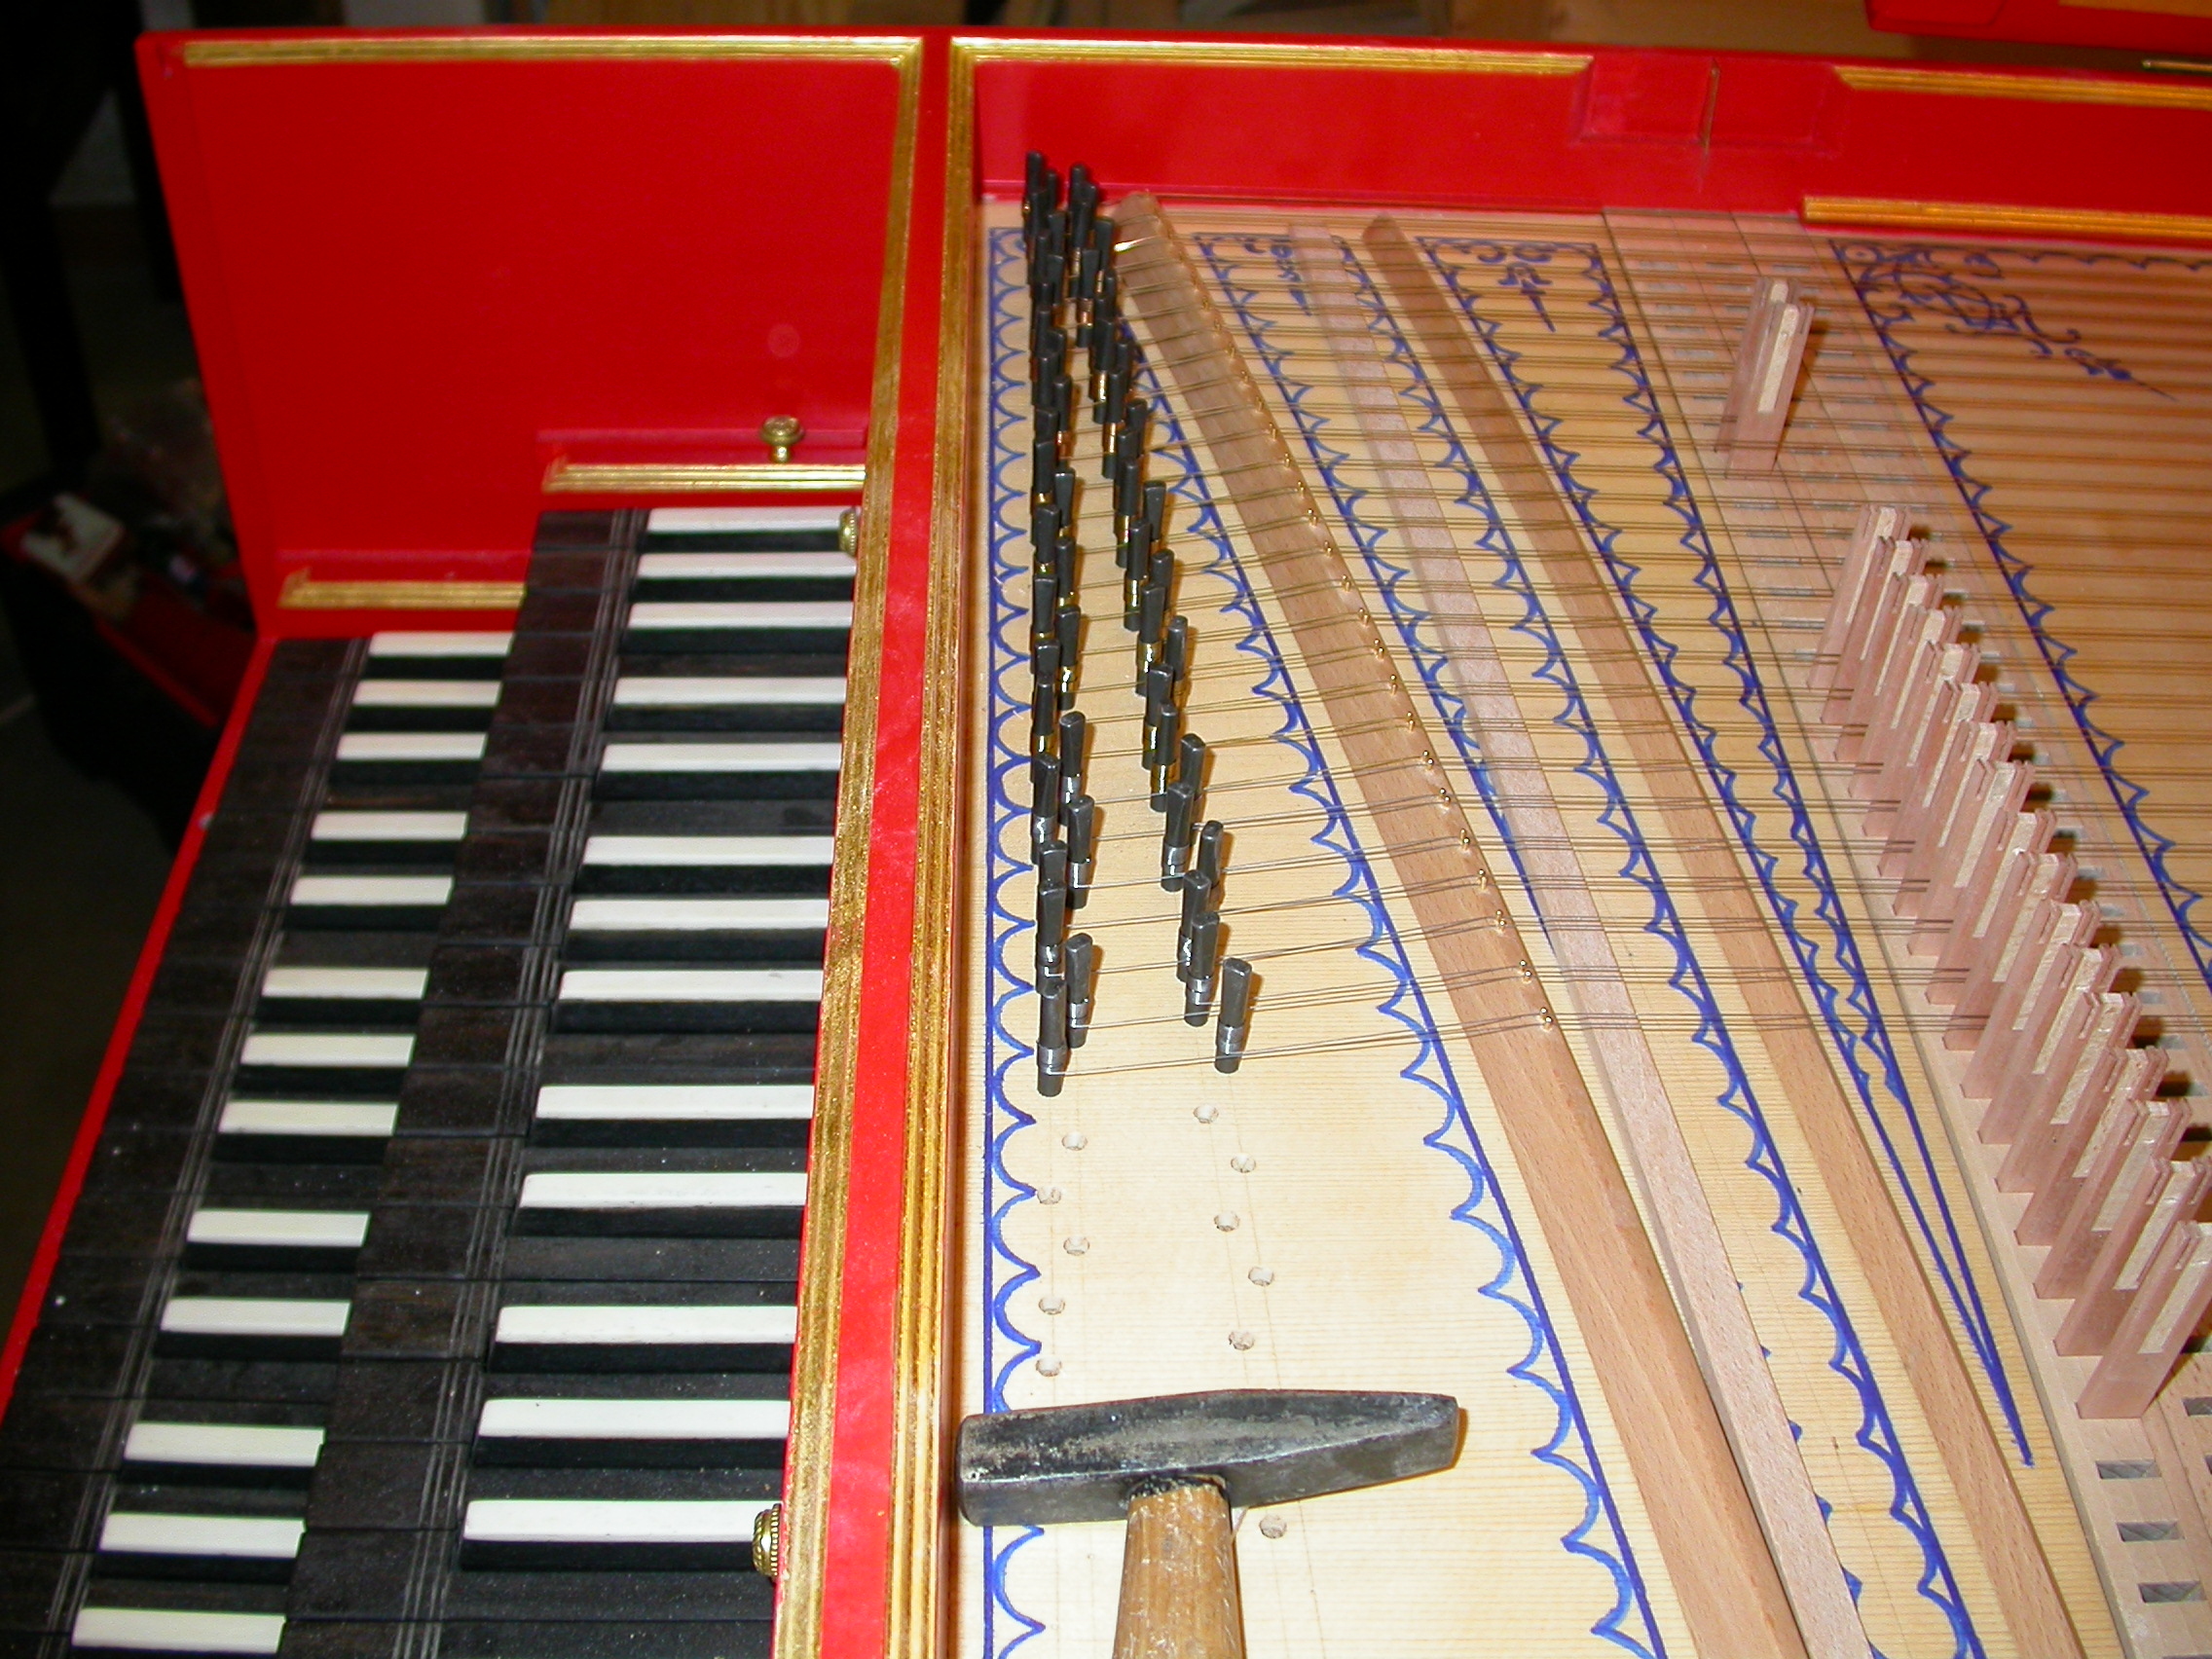 paul piano instrument music keys hammer in the making under cinstruction craft school snares pegs